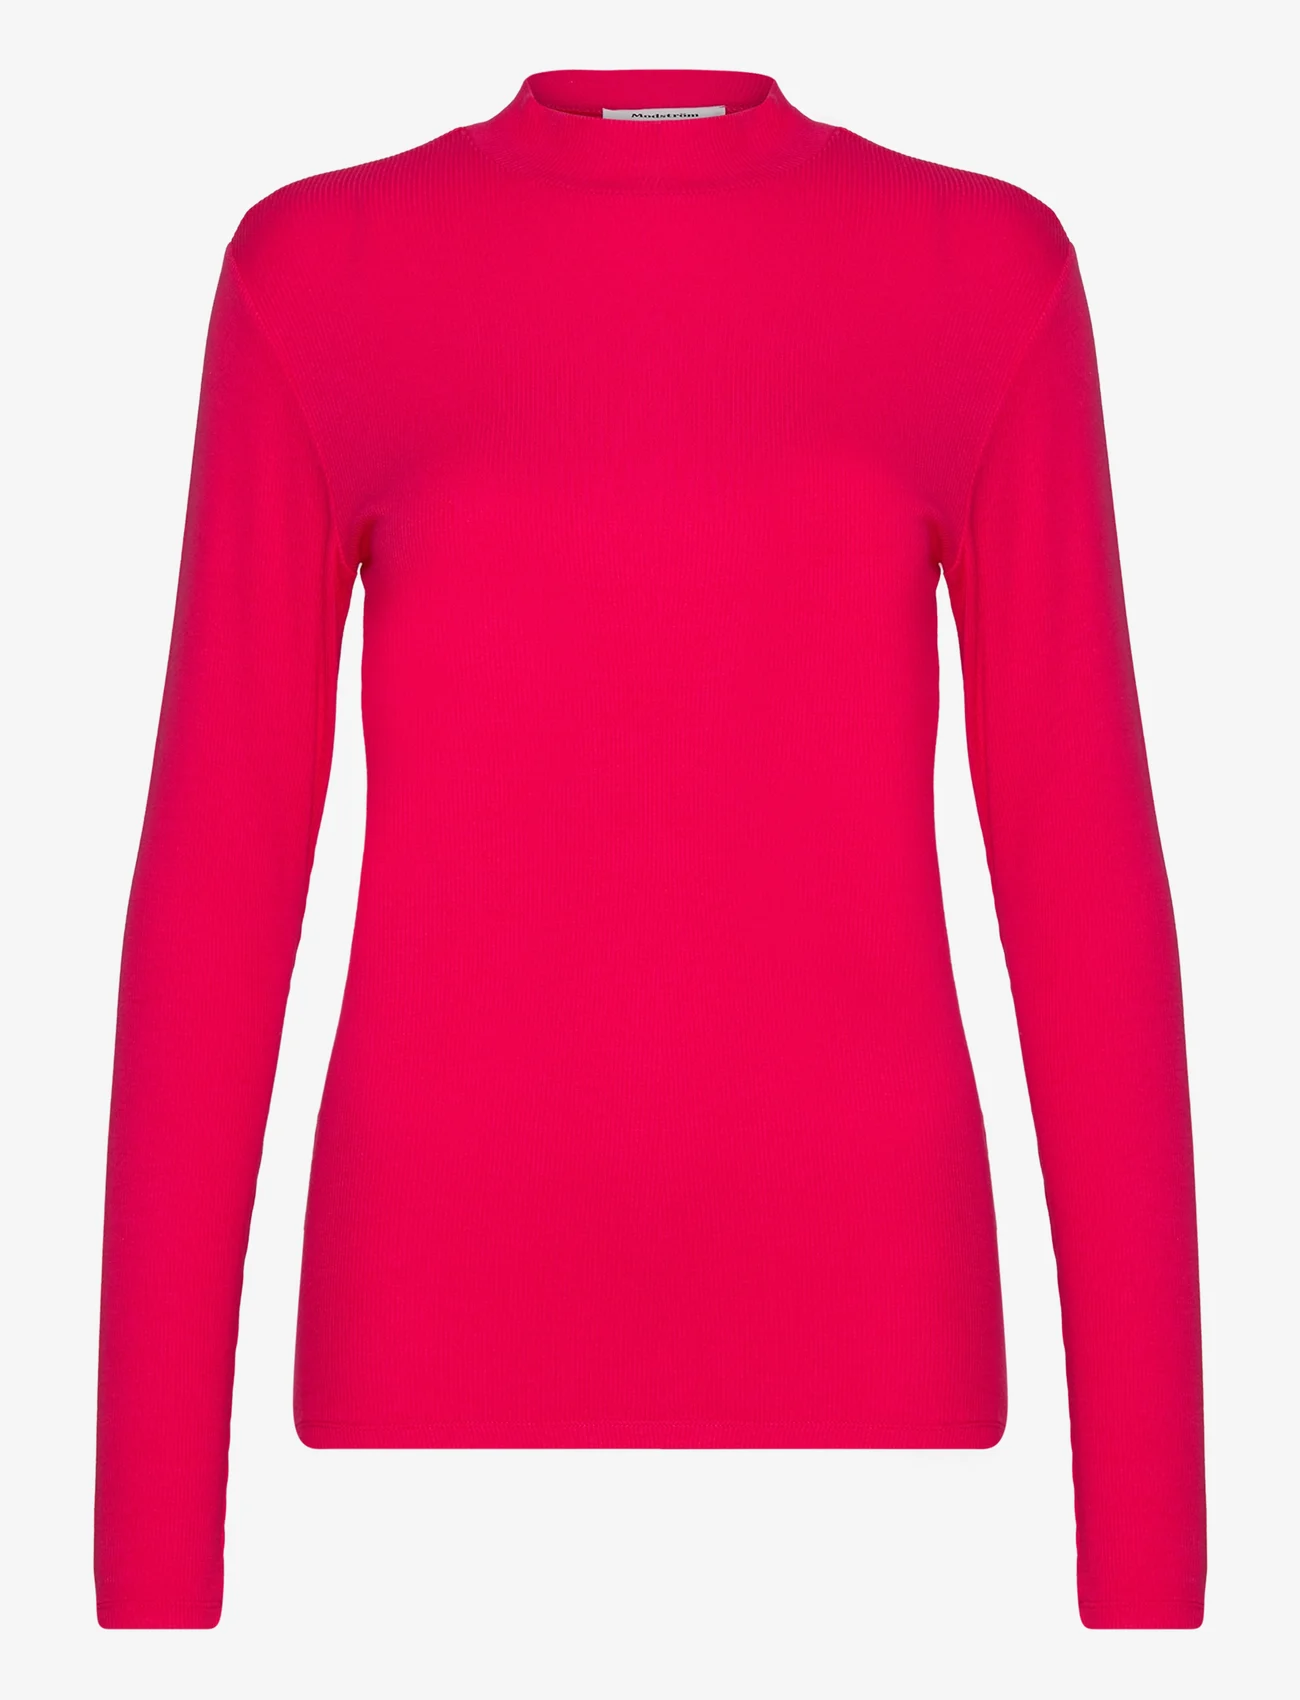 Modström - Krown LS t-neck - t-shirt & tops - virtual pink - 0